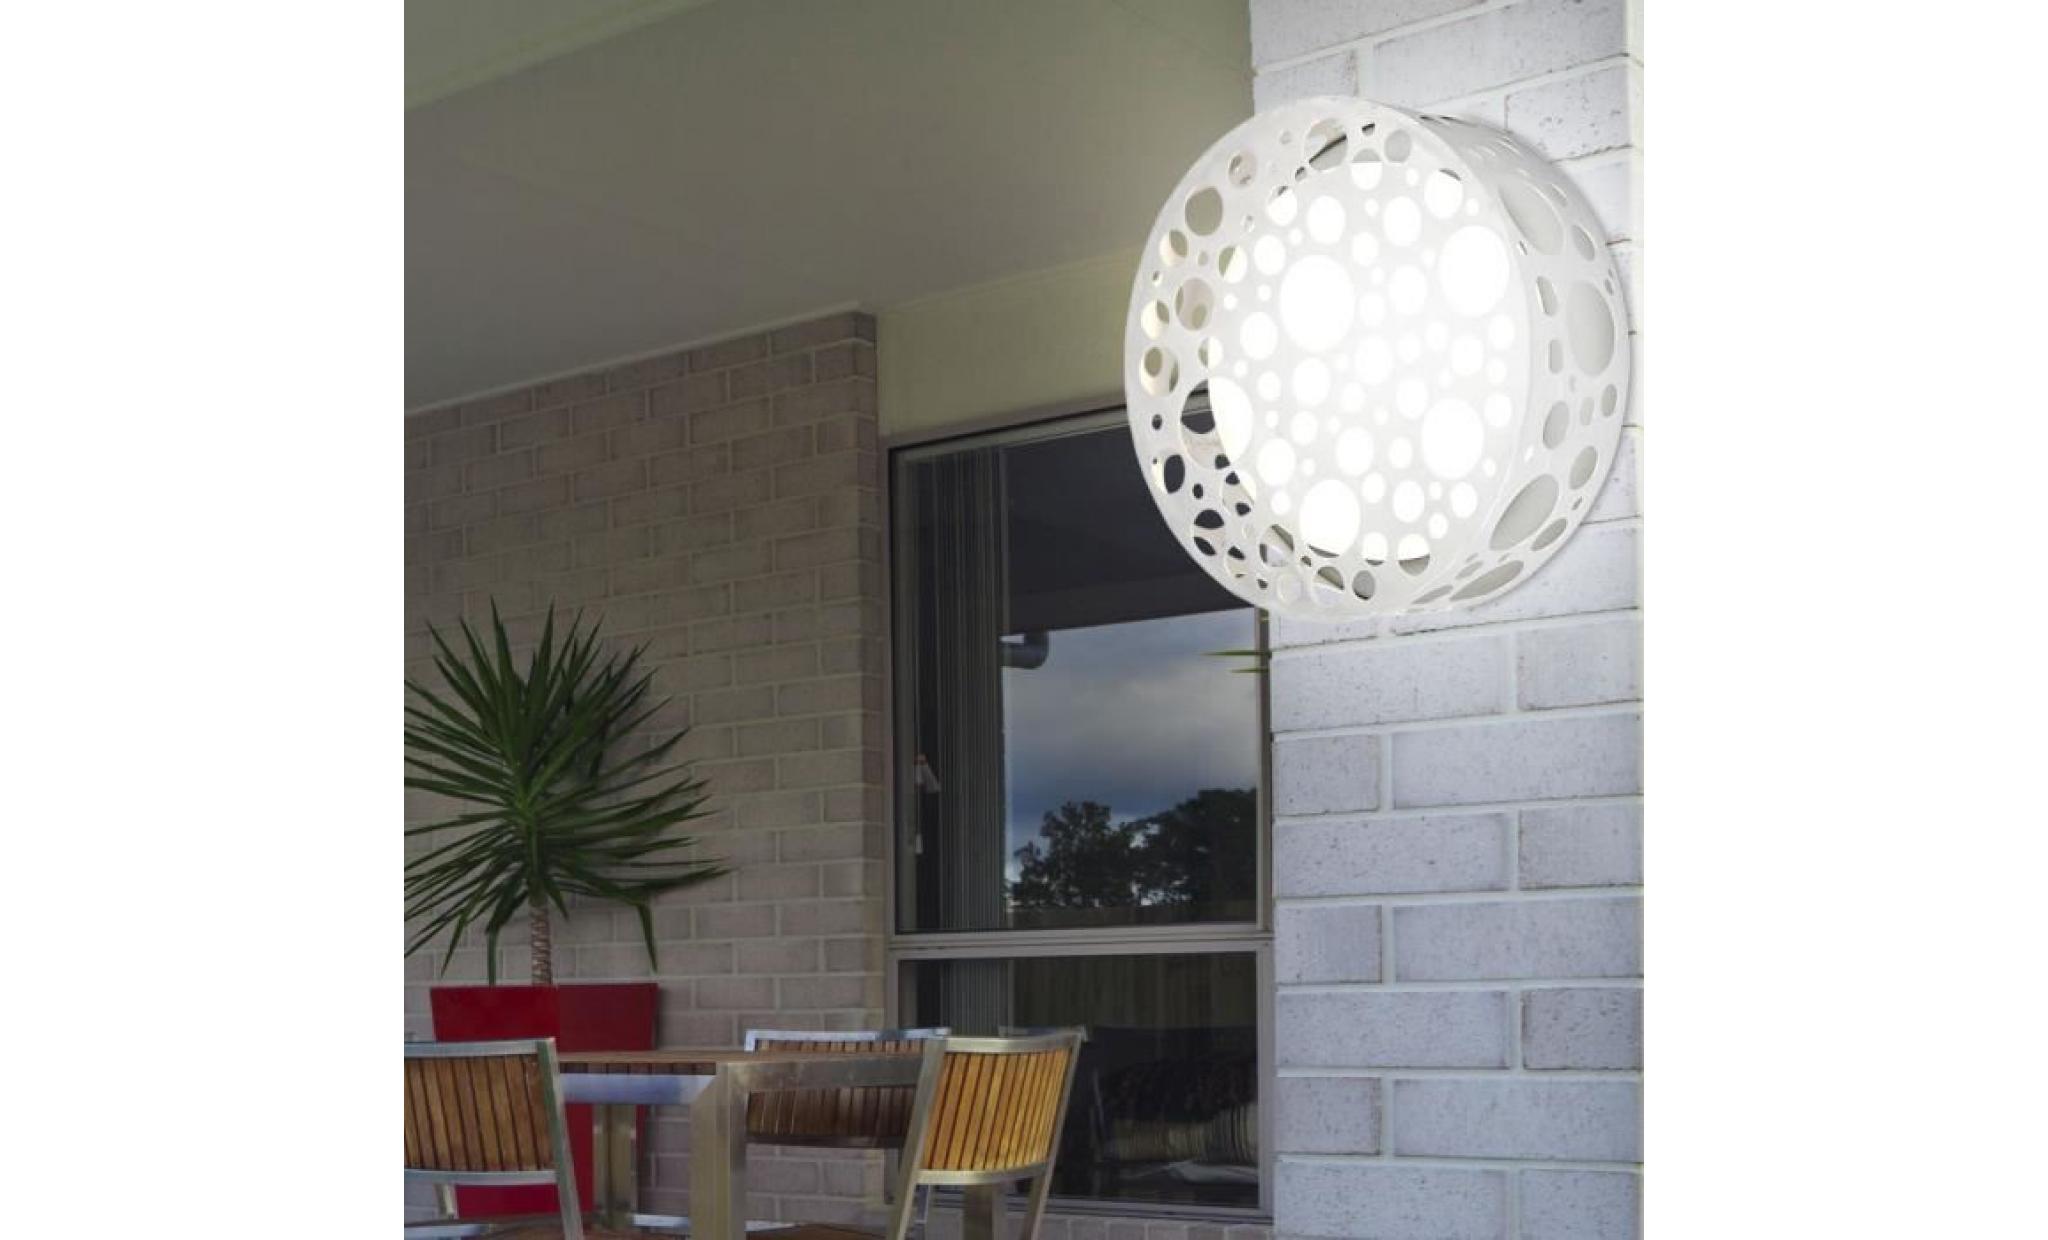 2 x applique luminaire mural espace extérieur ip54 verre aluminium terrasse jardin lampe pas cher